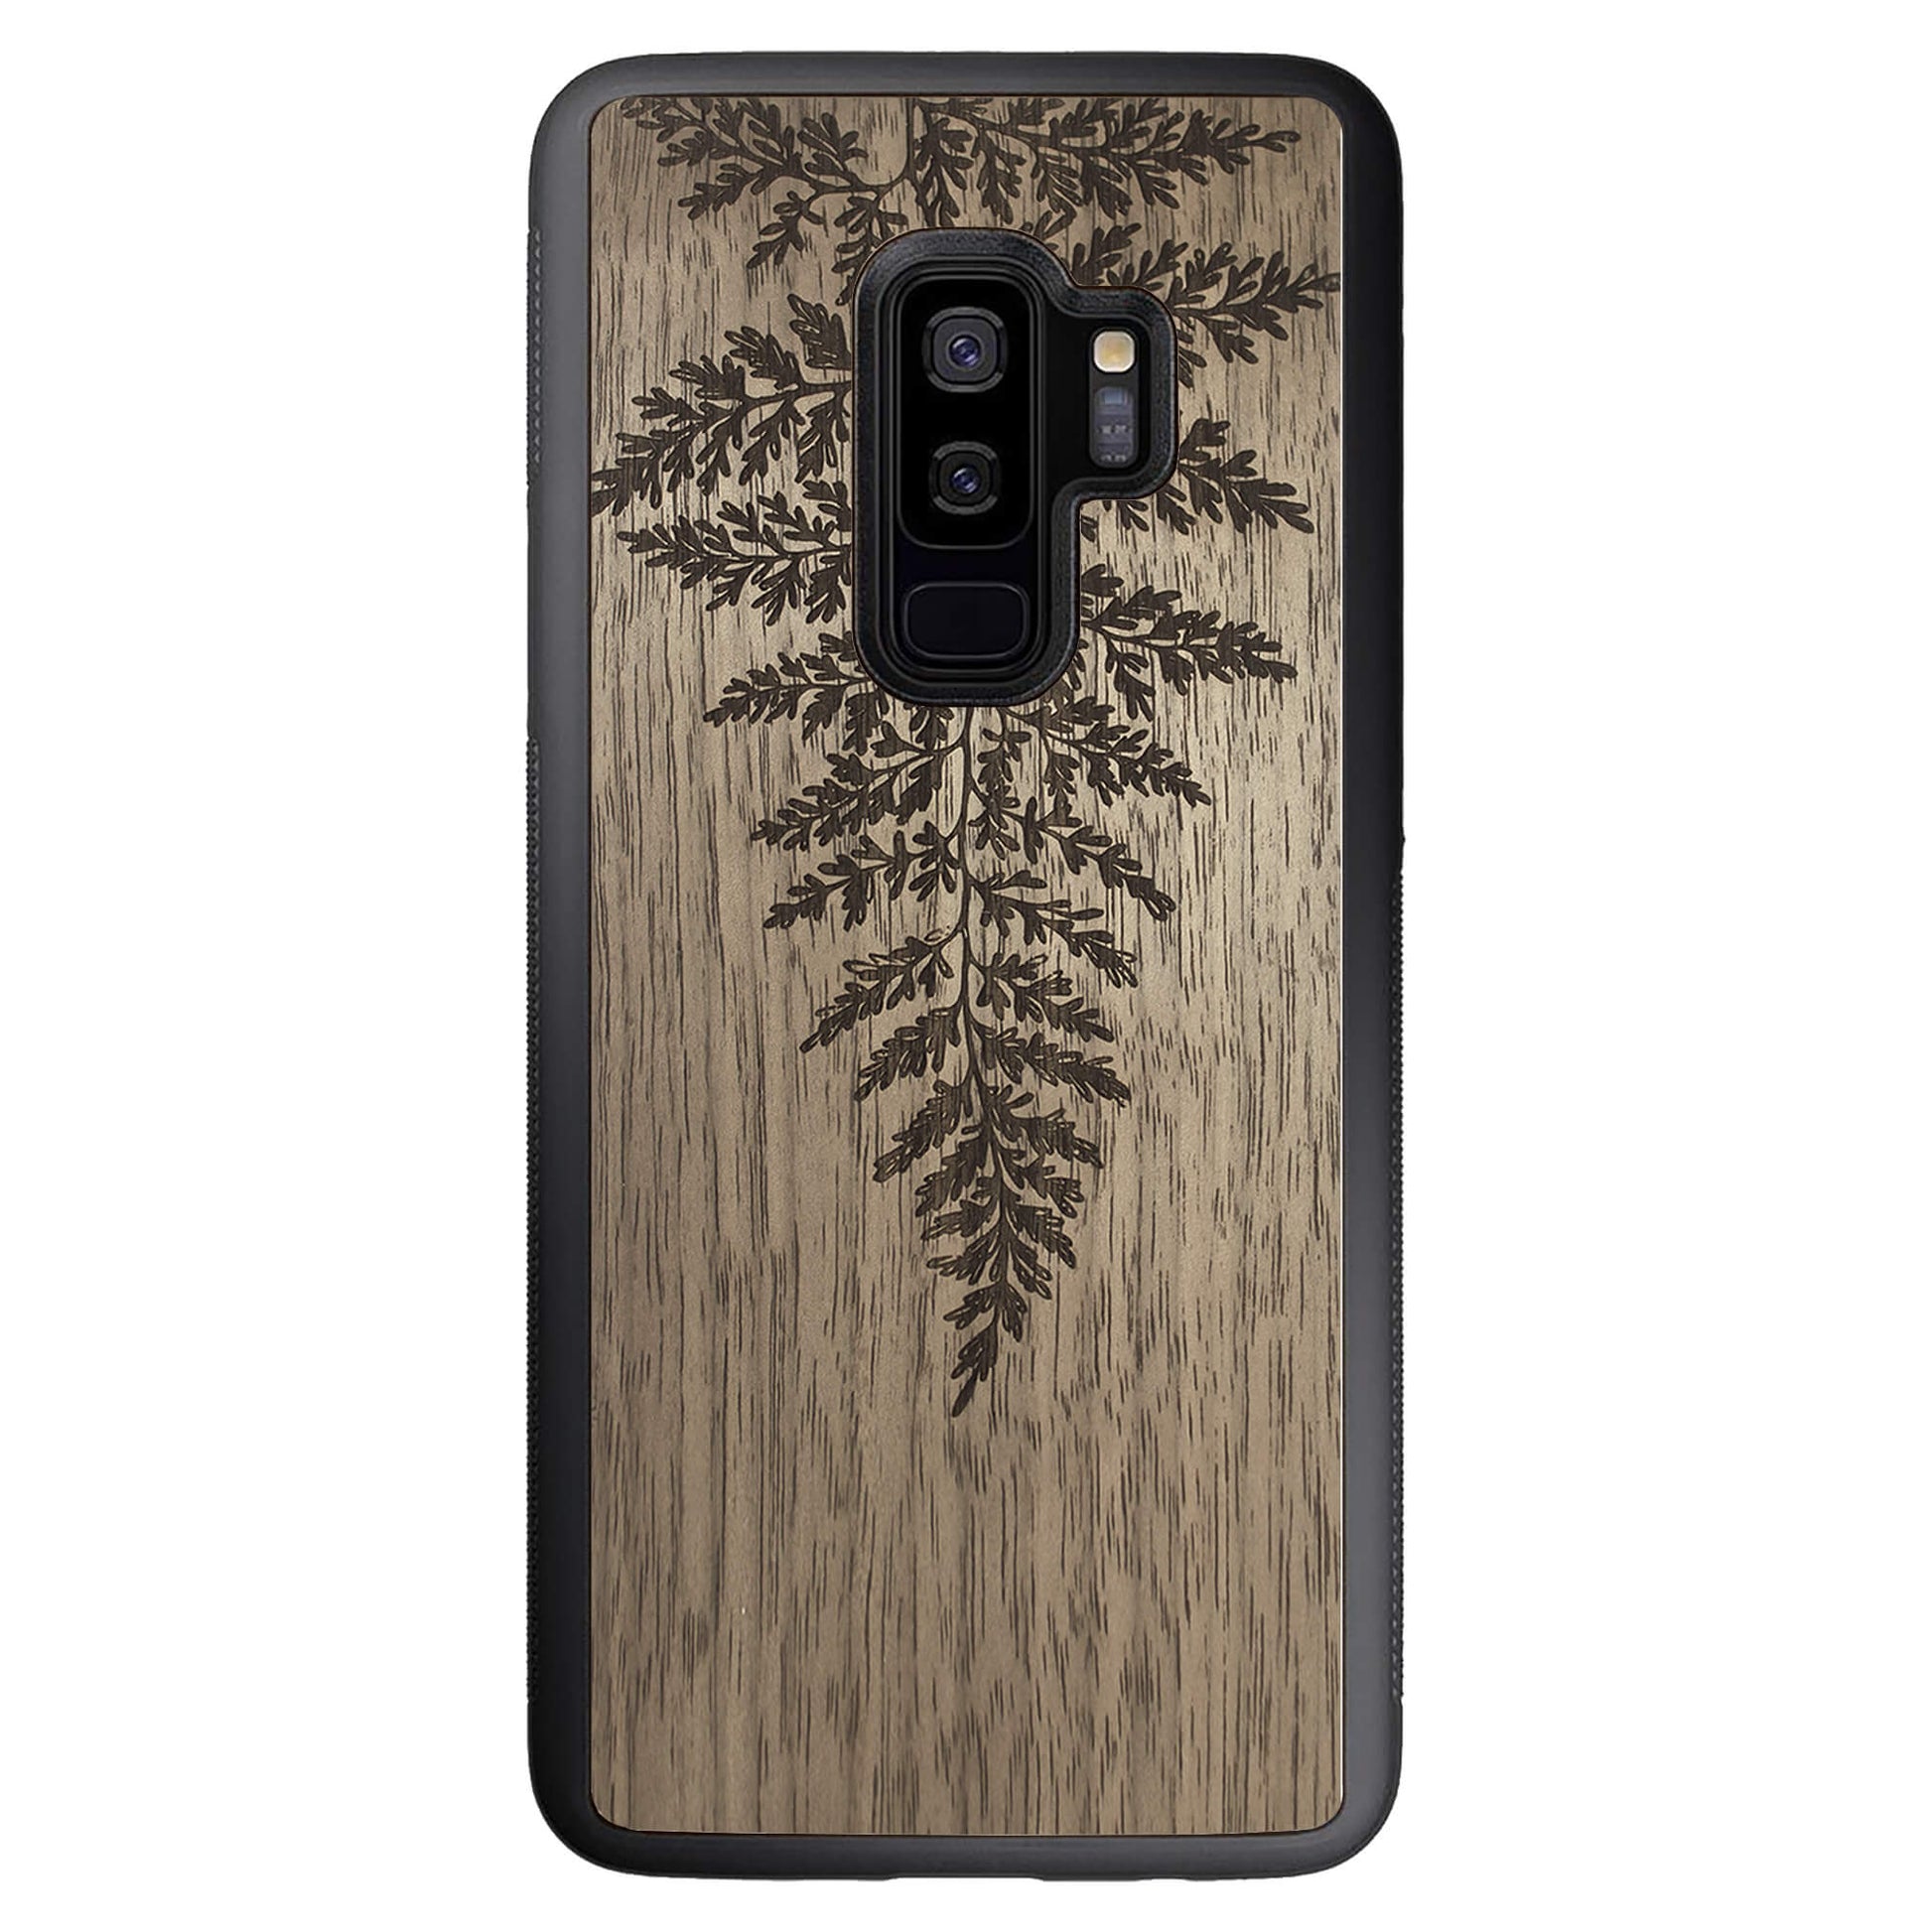 Wooden Case for Samsung Galaxy S9 Plus Fern